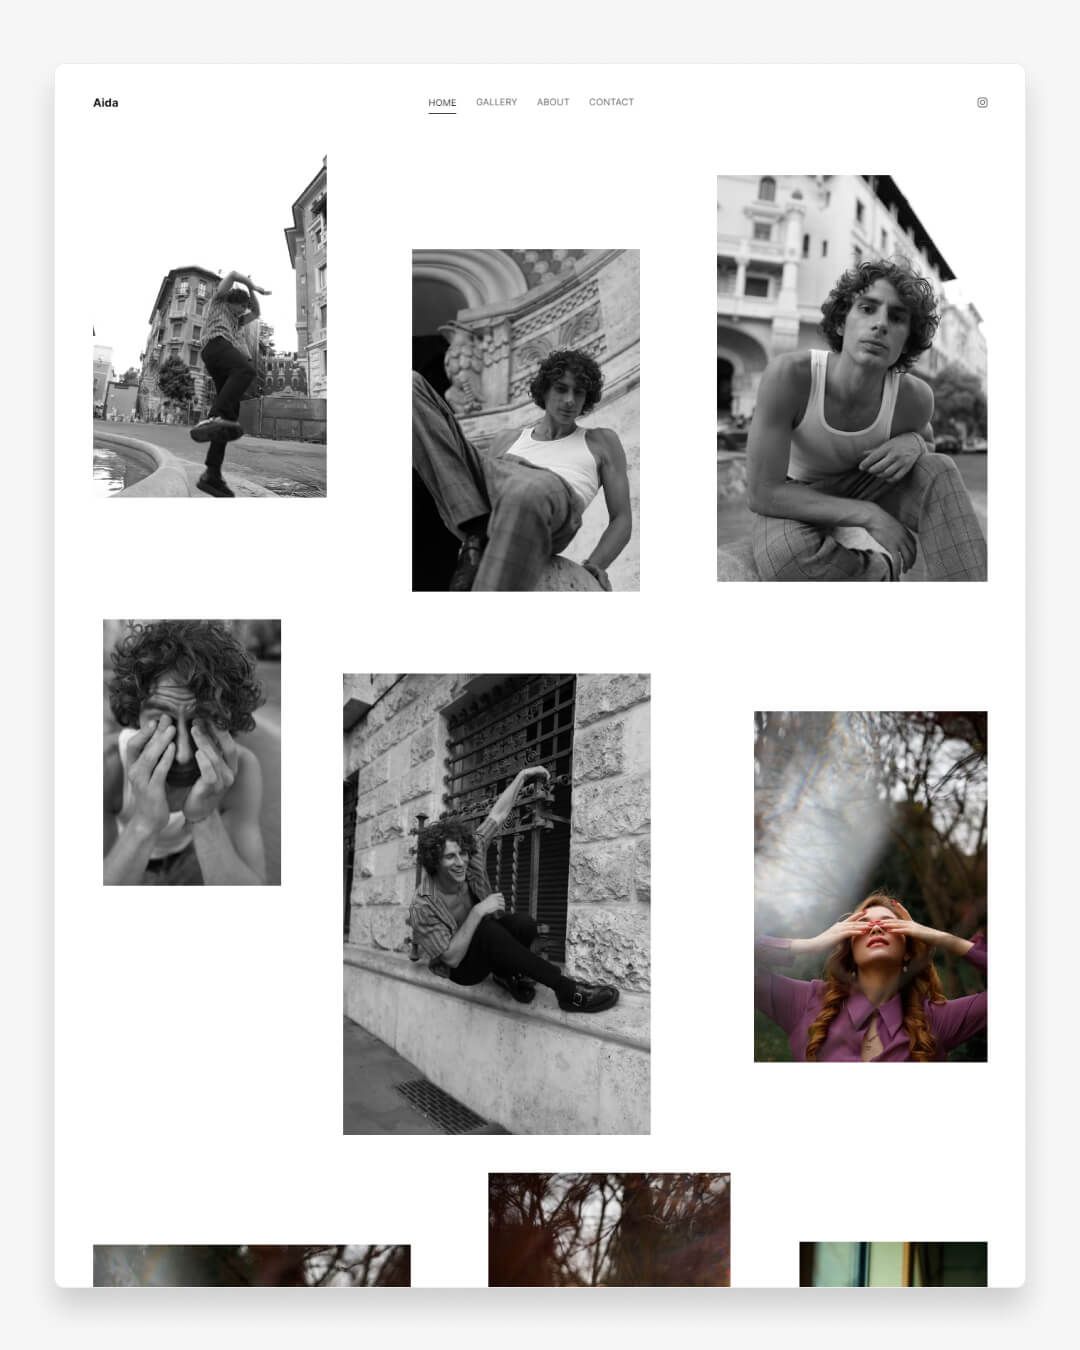 Le portfolio mode d'Aida Rakhimova avec des images fixes